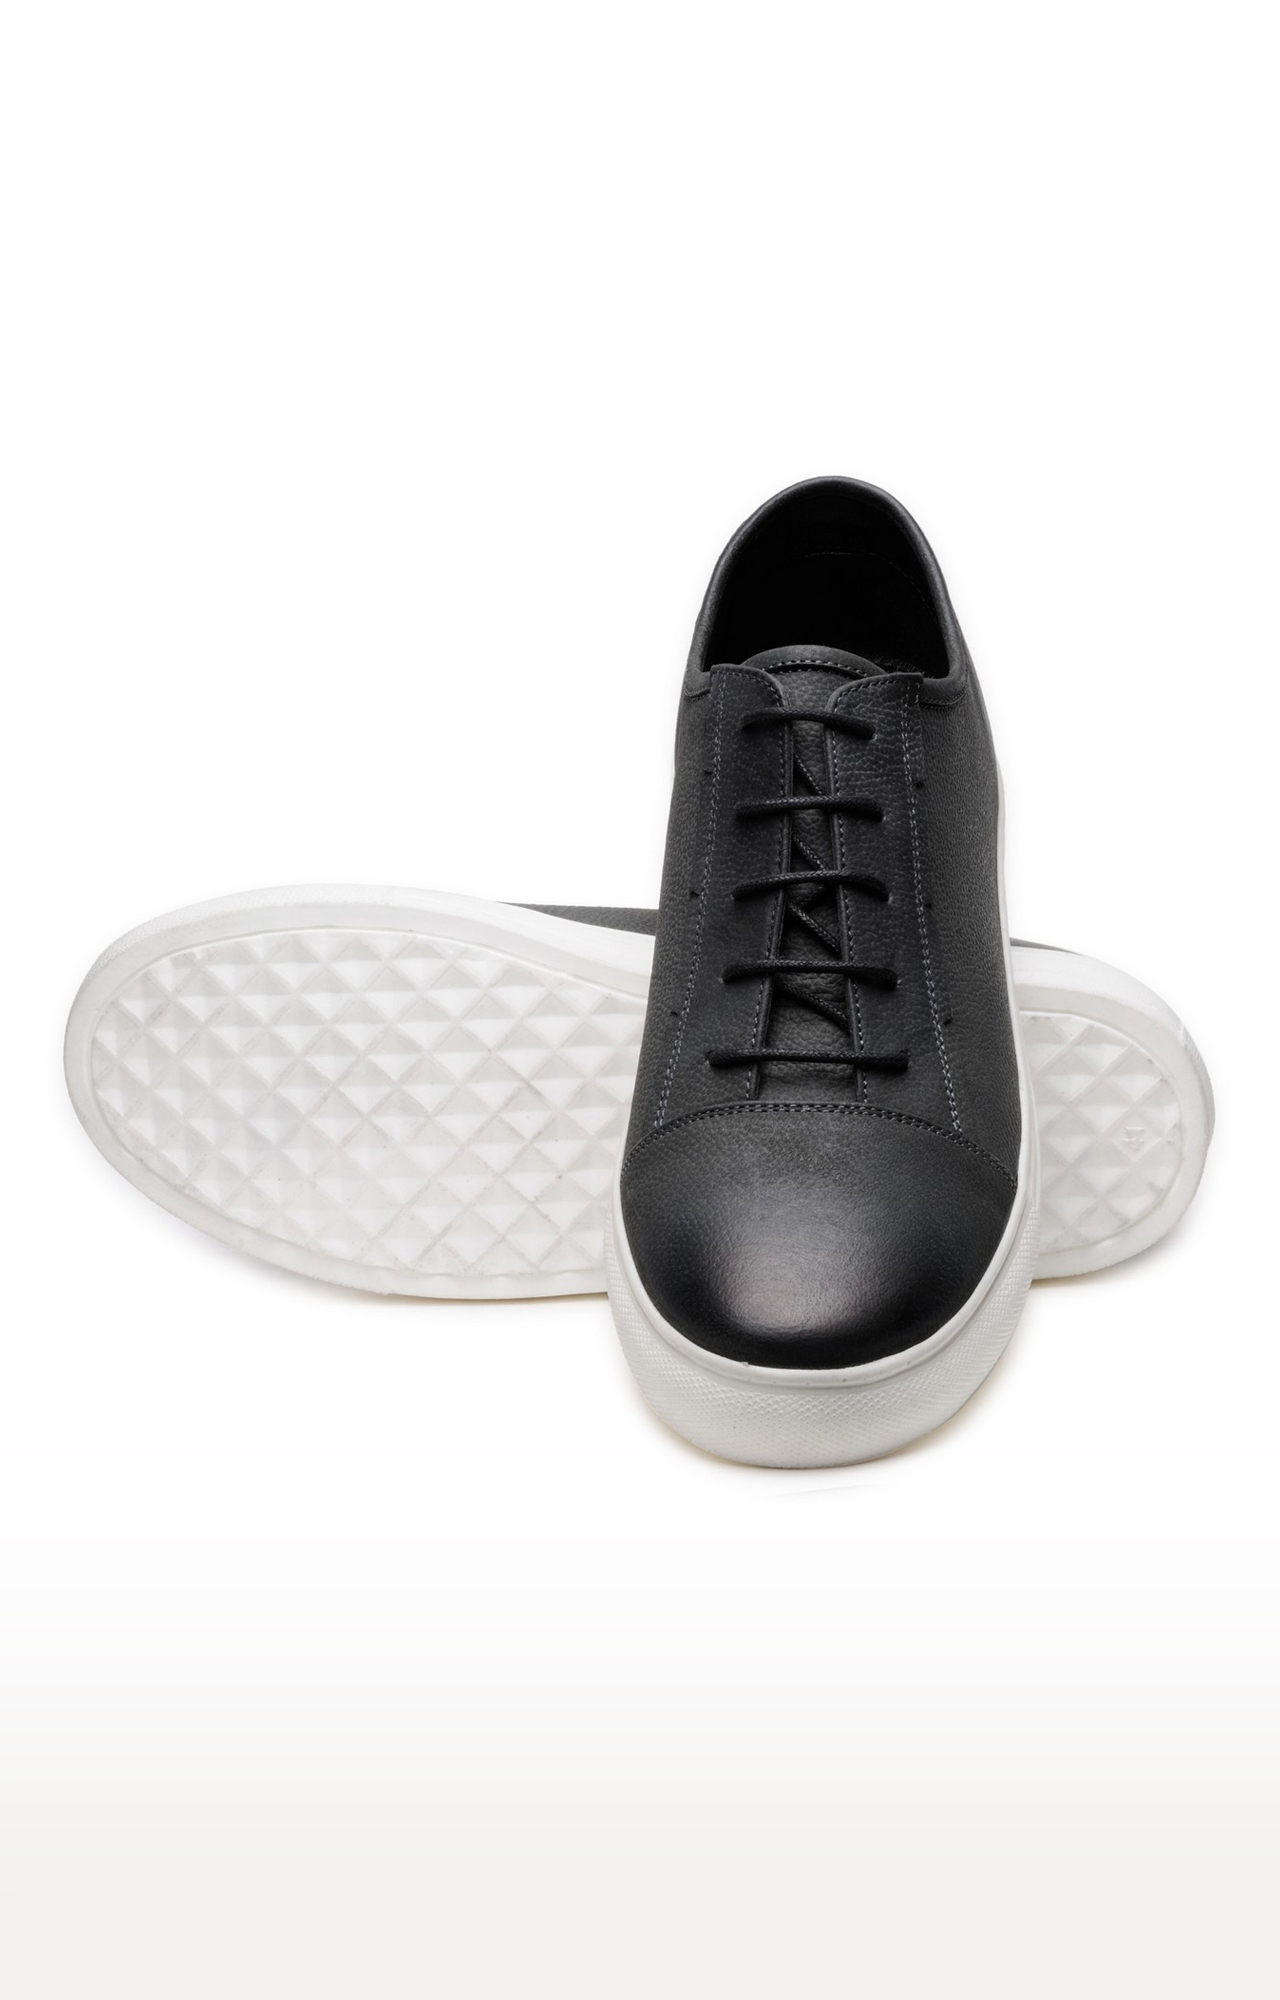 FRANCO LEONE | Franco Leone Charcoal Leather Sneakers 4